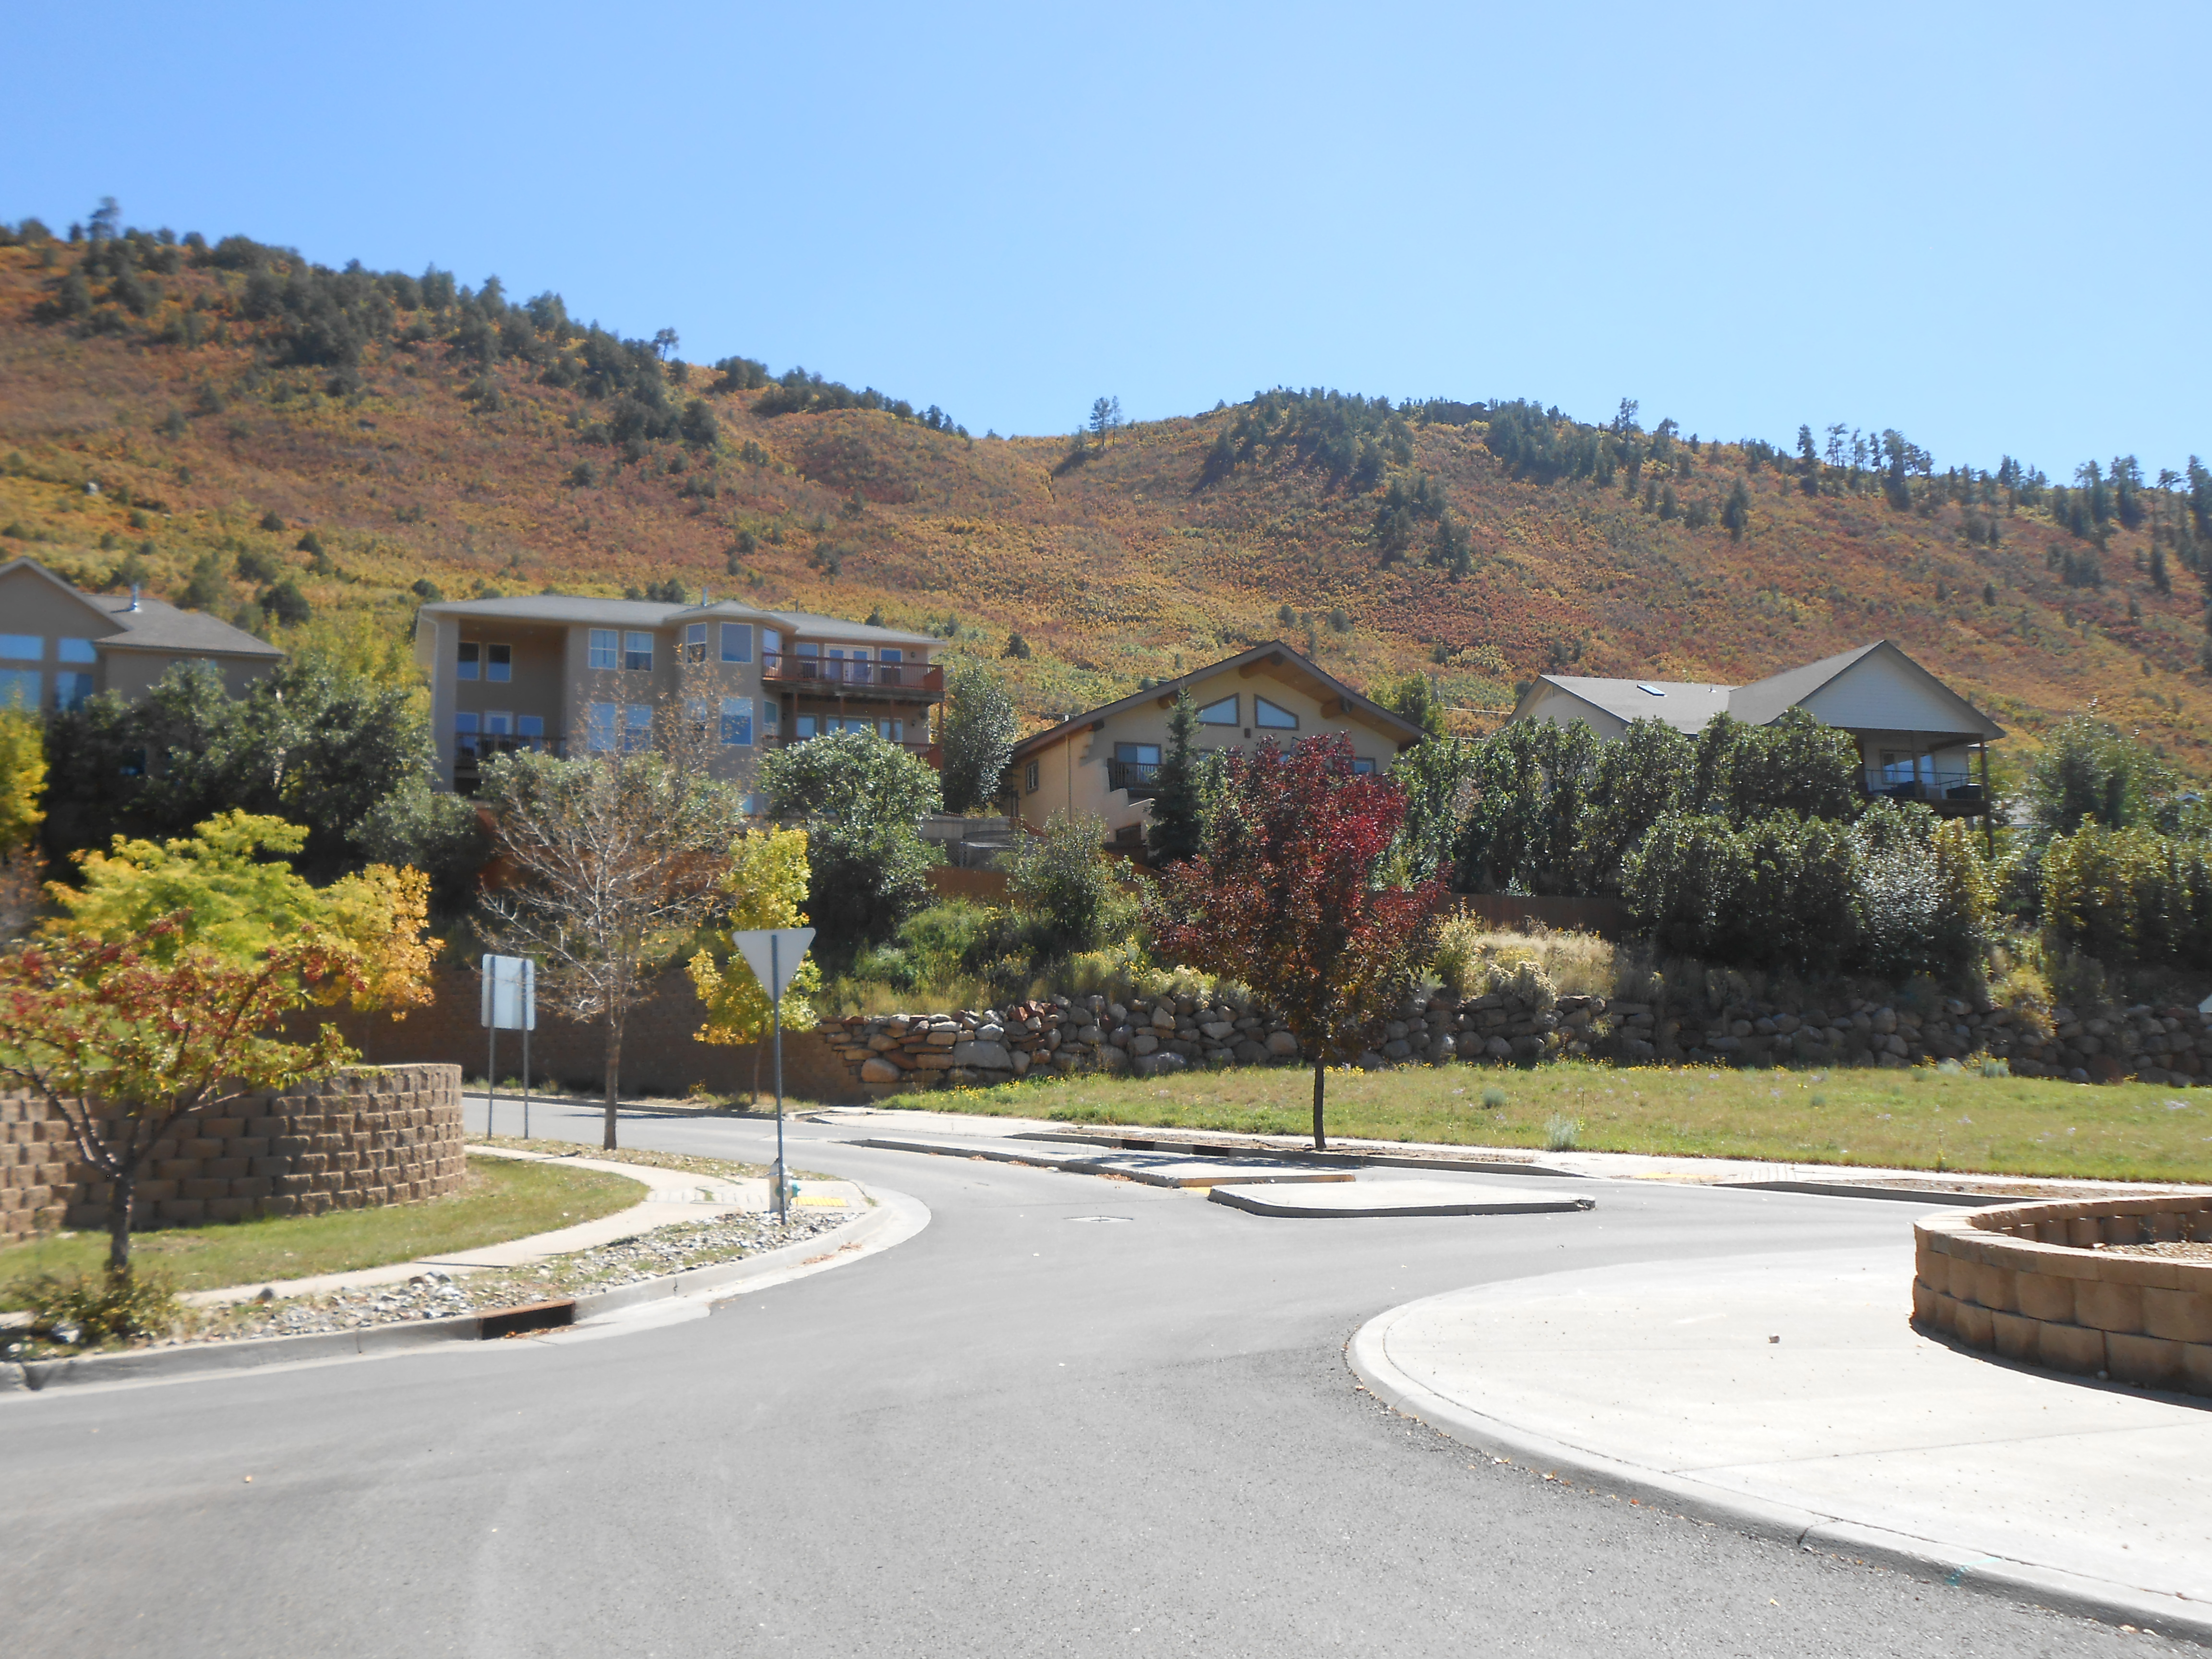 DSCN0816 - Real Estate Durango Colorado | Durango Real Estate Network